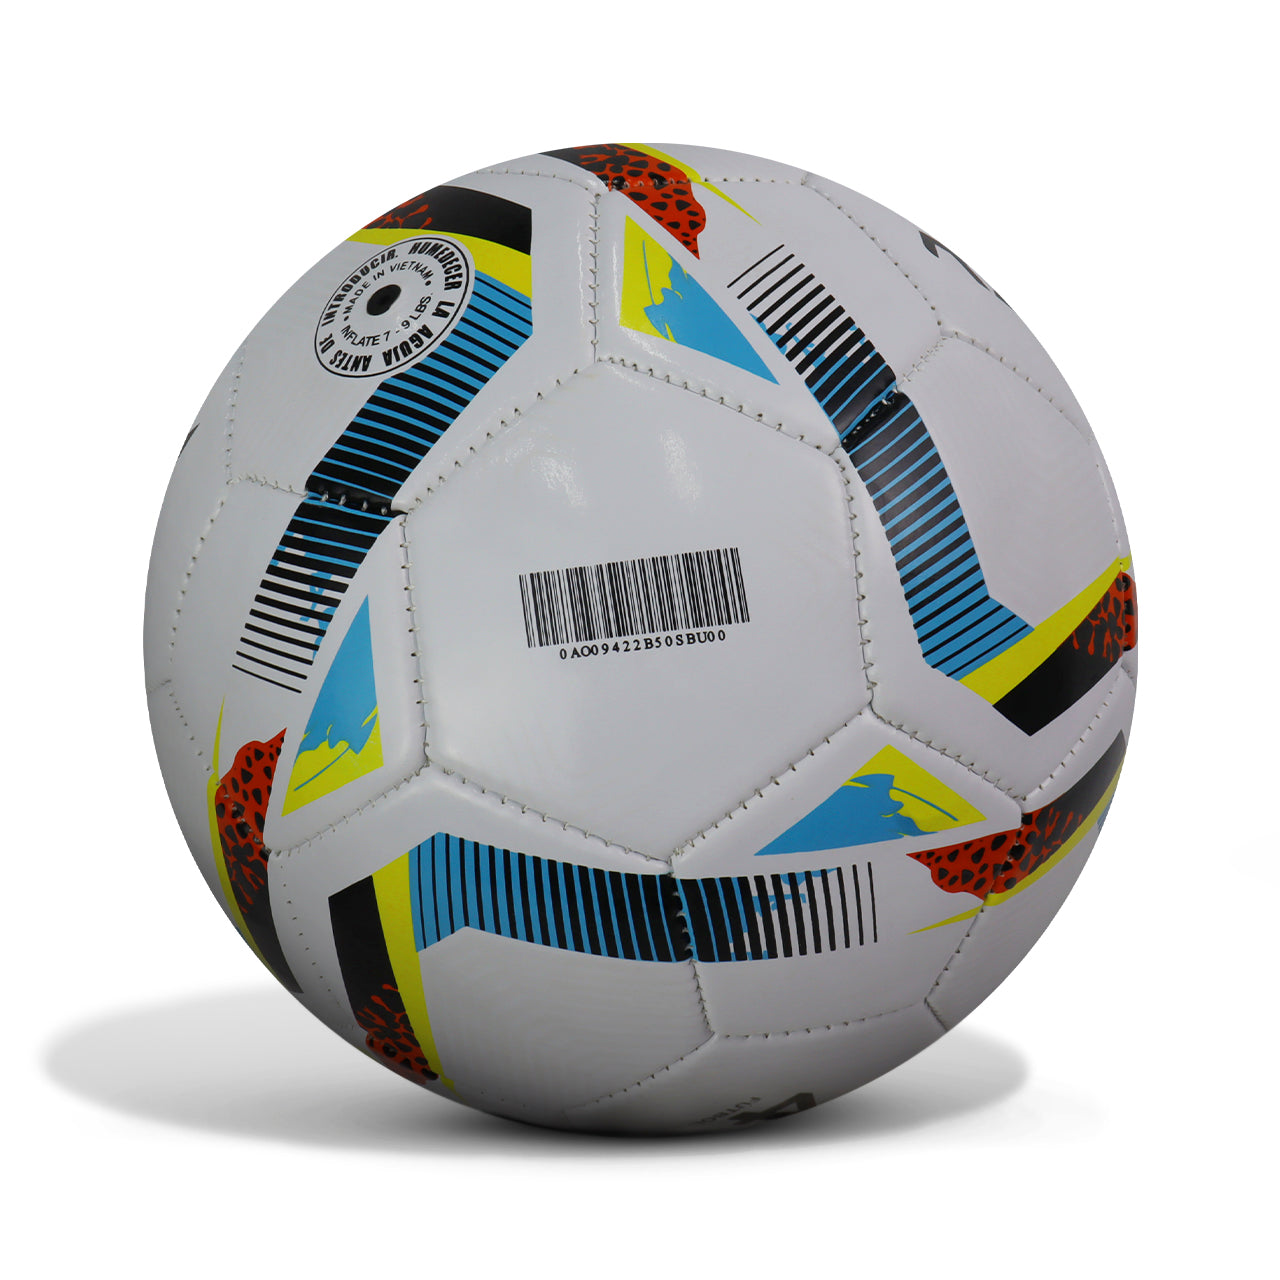 Balones de Fútbol / Football Varios – Productos Superiores, S. A. (SUPRO)